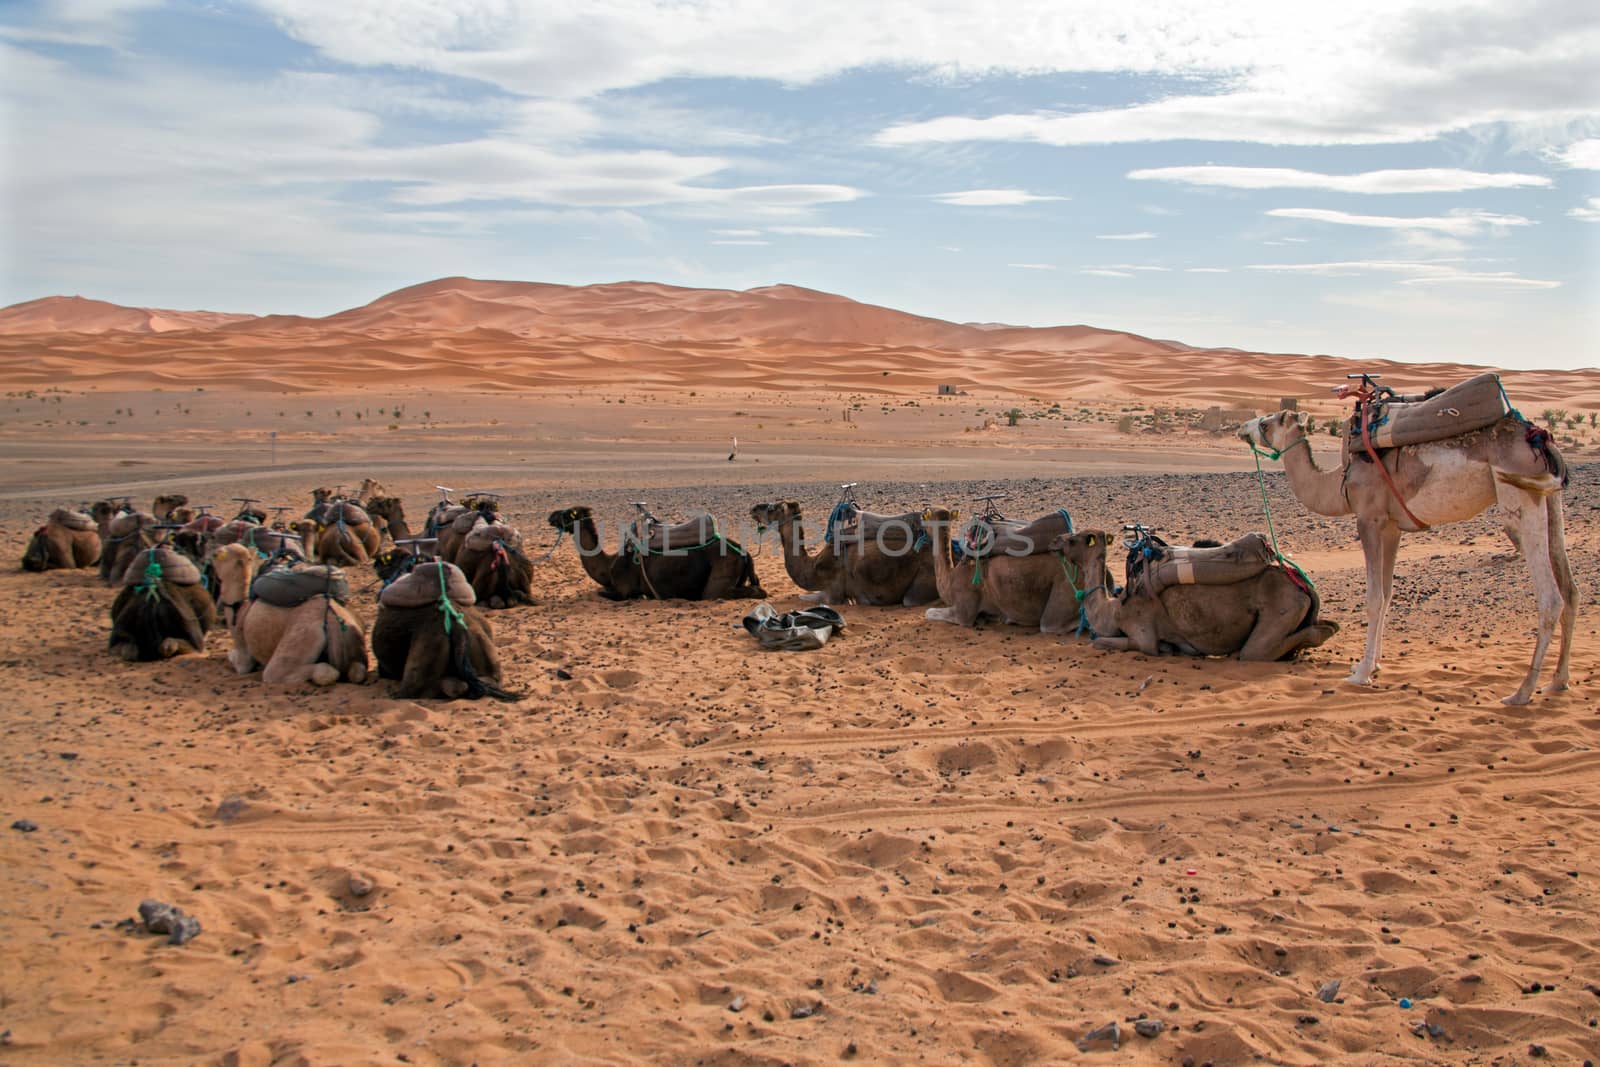 Camels in the Erg Shebbi desert in Morocco